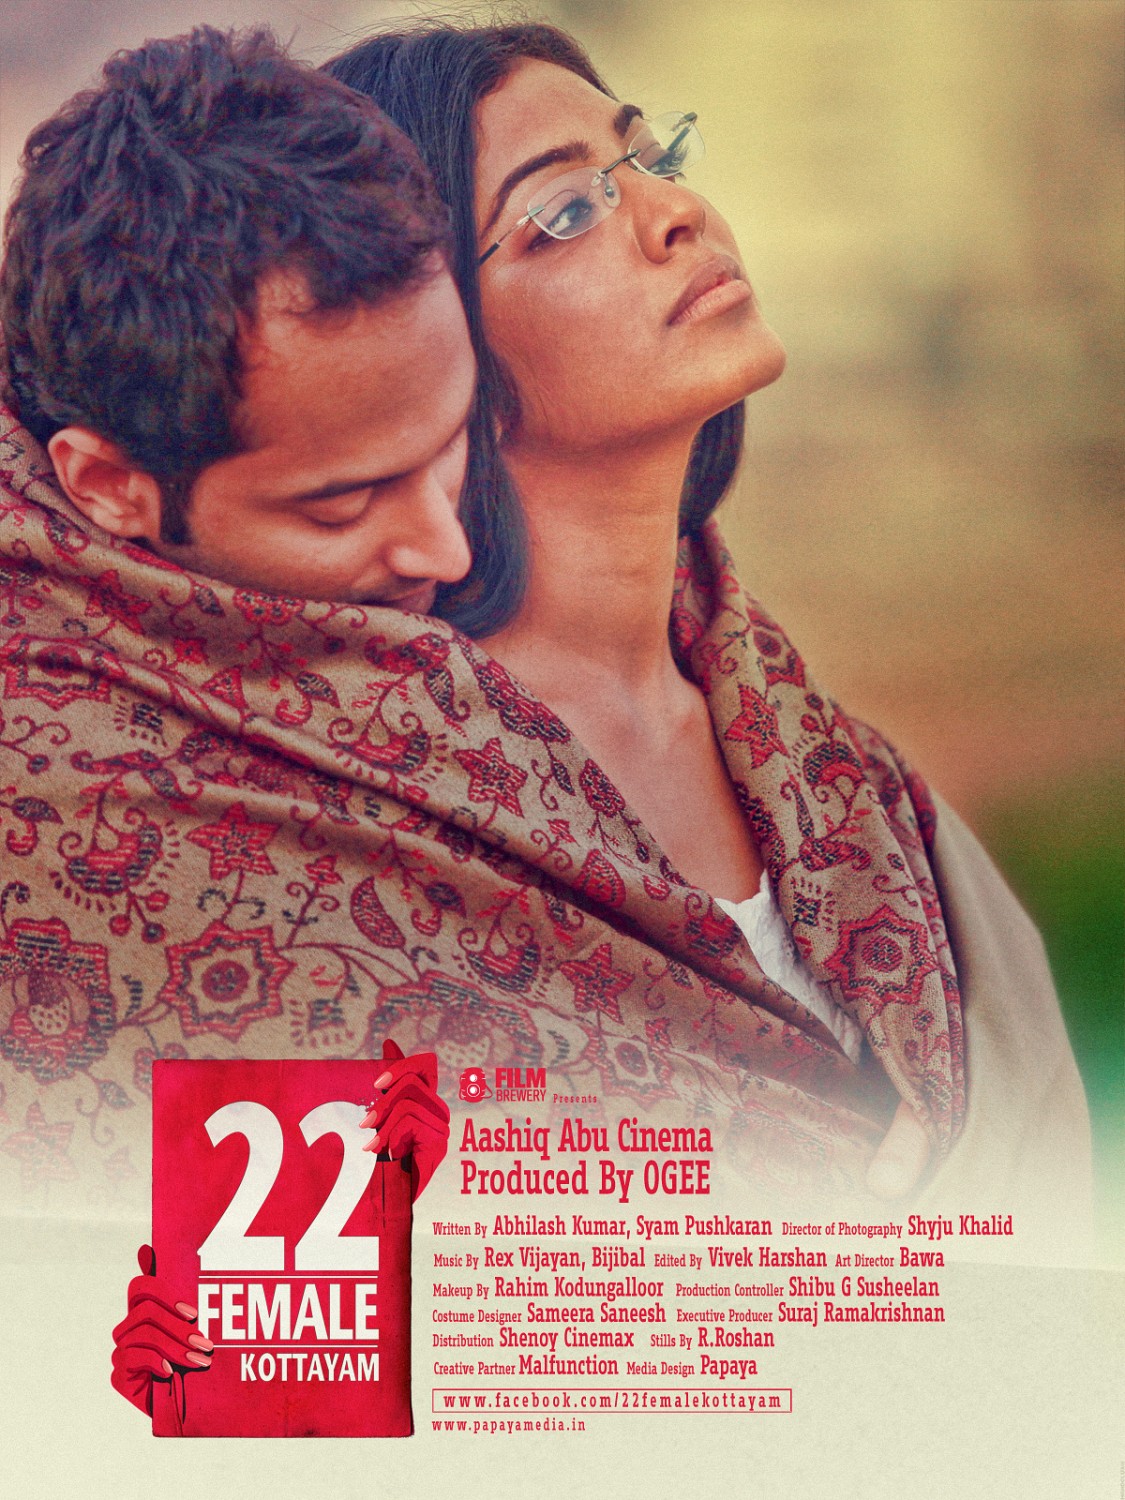 Extra Large Movie Poster Image for 22 Female Kottayam (#11 of 28)